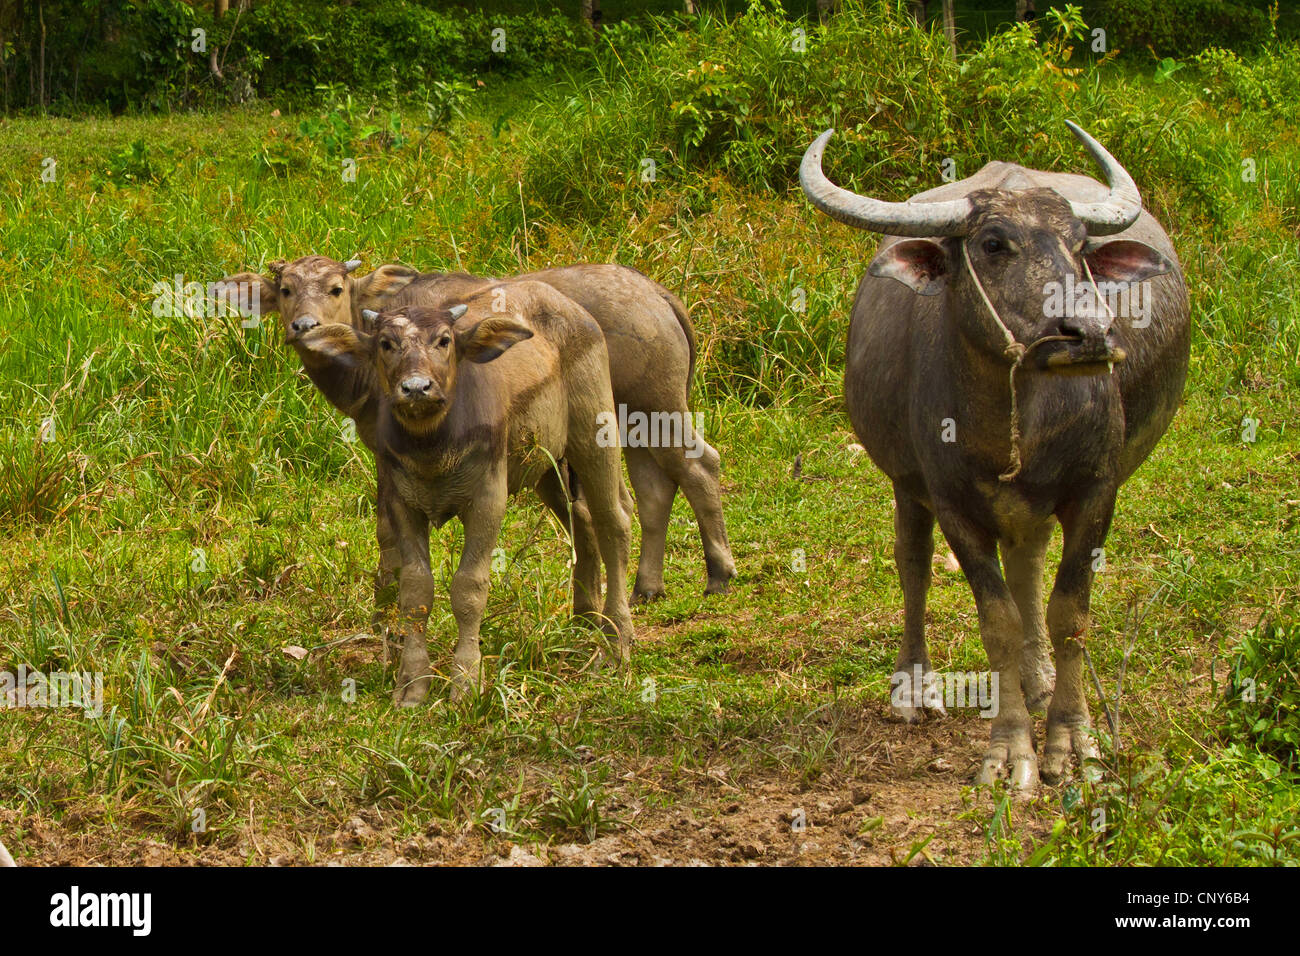 Asian water buffalo, wild water buffalo, carabao (Bubalus bubalis, Bubalus arnee), cow with two calves in a meadow, Thailand, Phuket Stock Photo